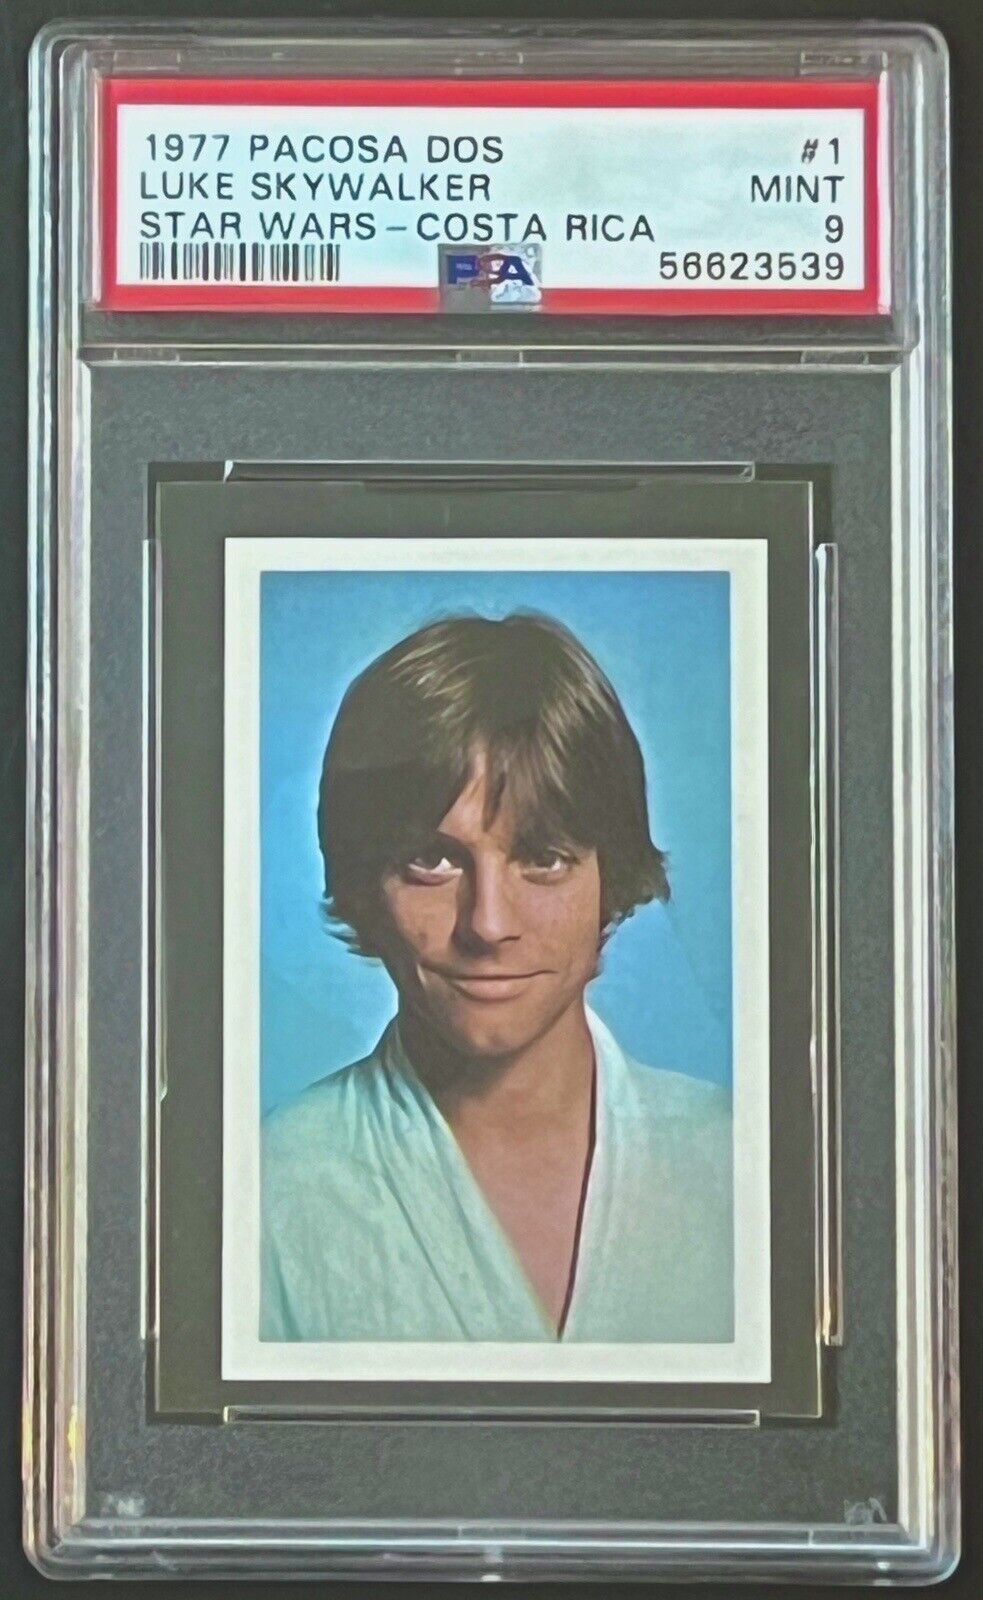 POP 1 No 10 PSA 9 RC Luke Skywalker 1977 Star Wars Pacosa Dos Rookie Costa Rica